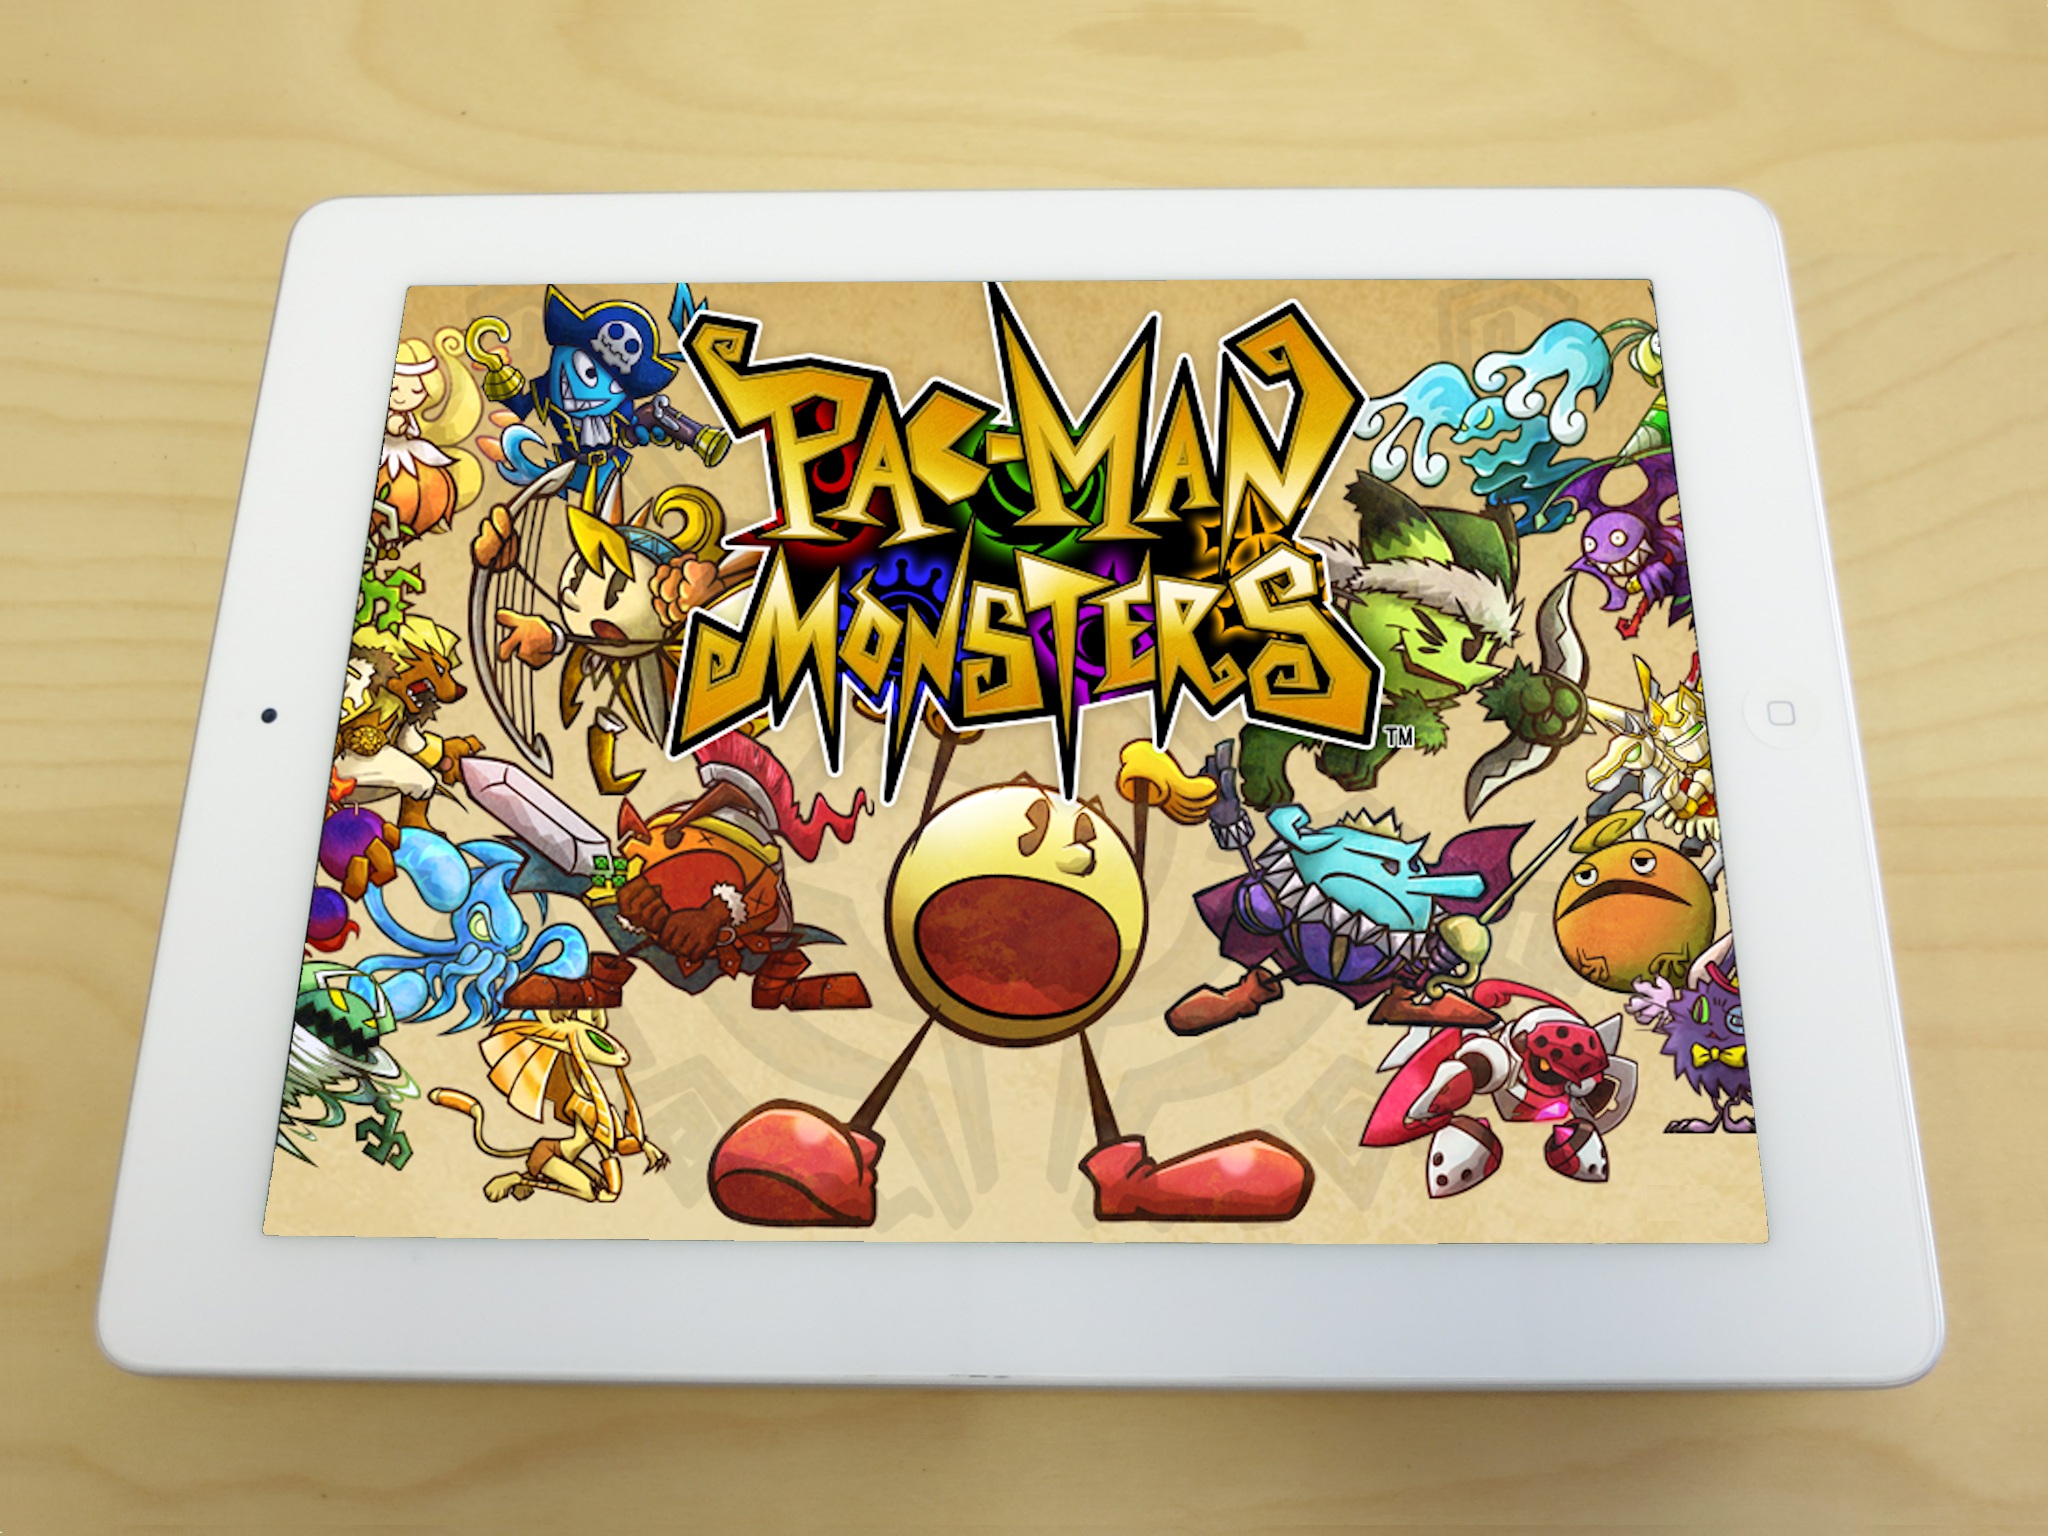 Pac-Man Monsters arrives on iOS mockup